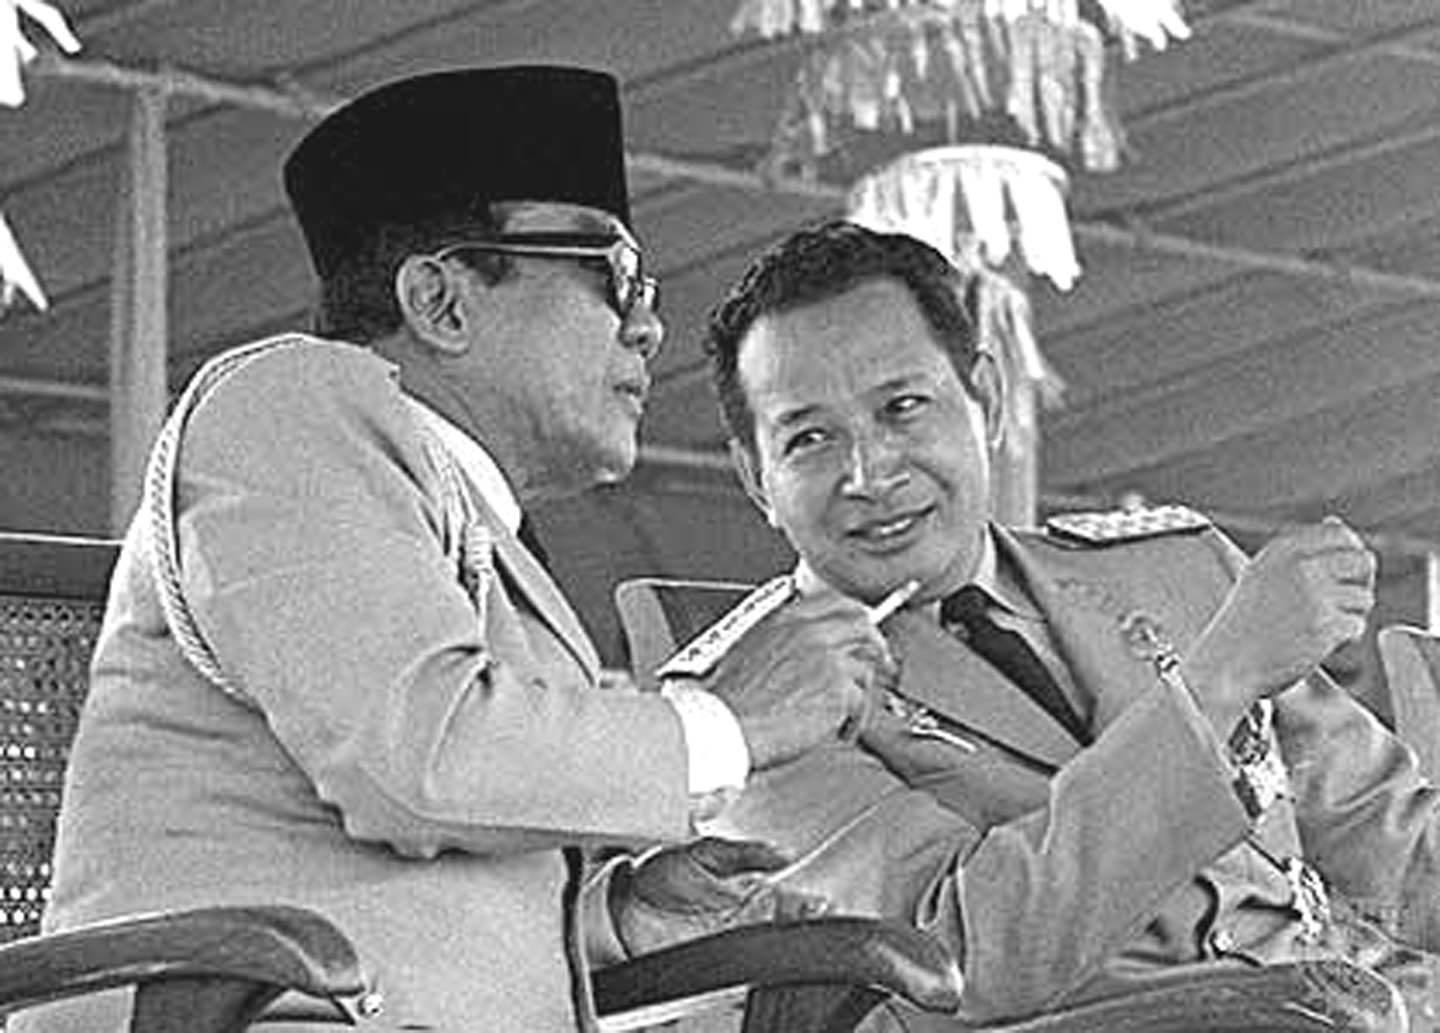 Korupsi dan Nilai-Nilai Pancasila - Soekarno dan Soeharto